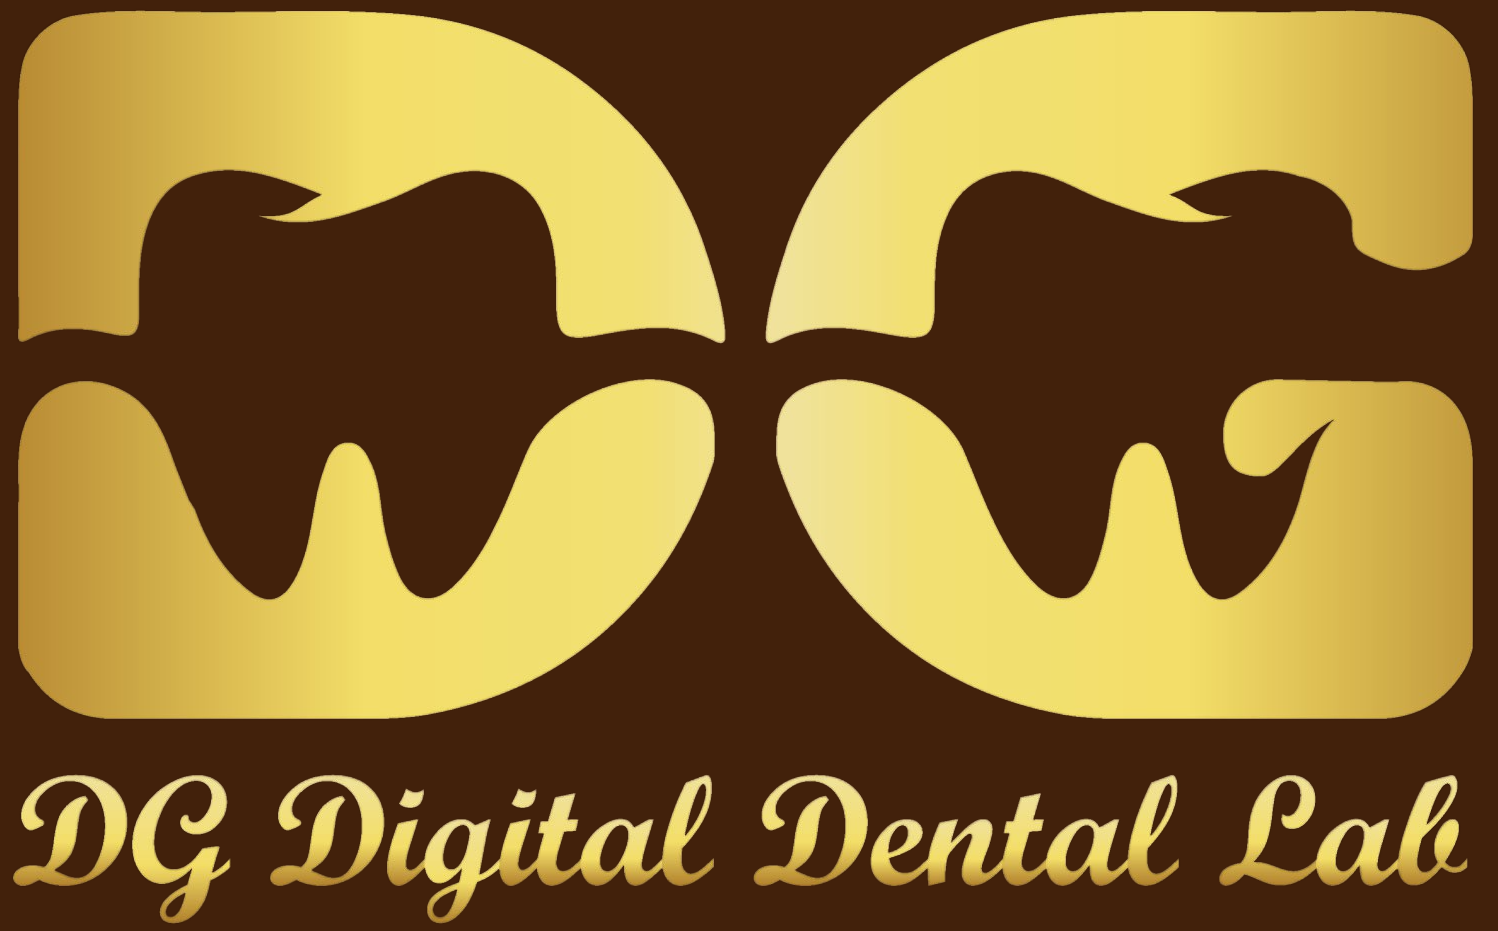 DG Digital lab logo